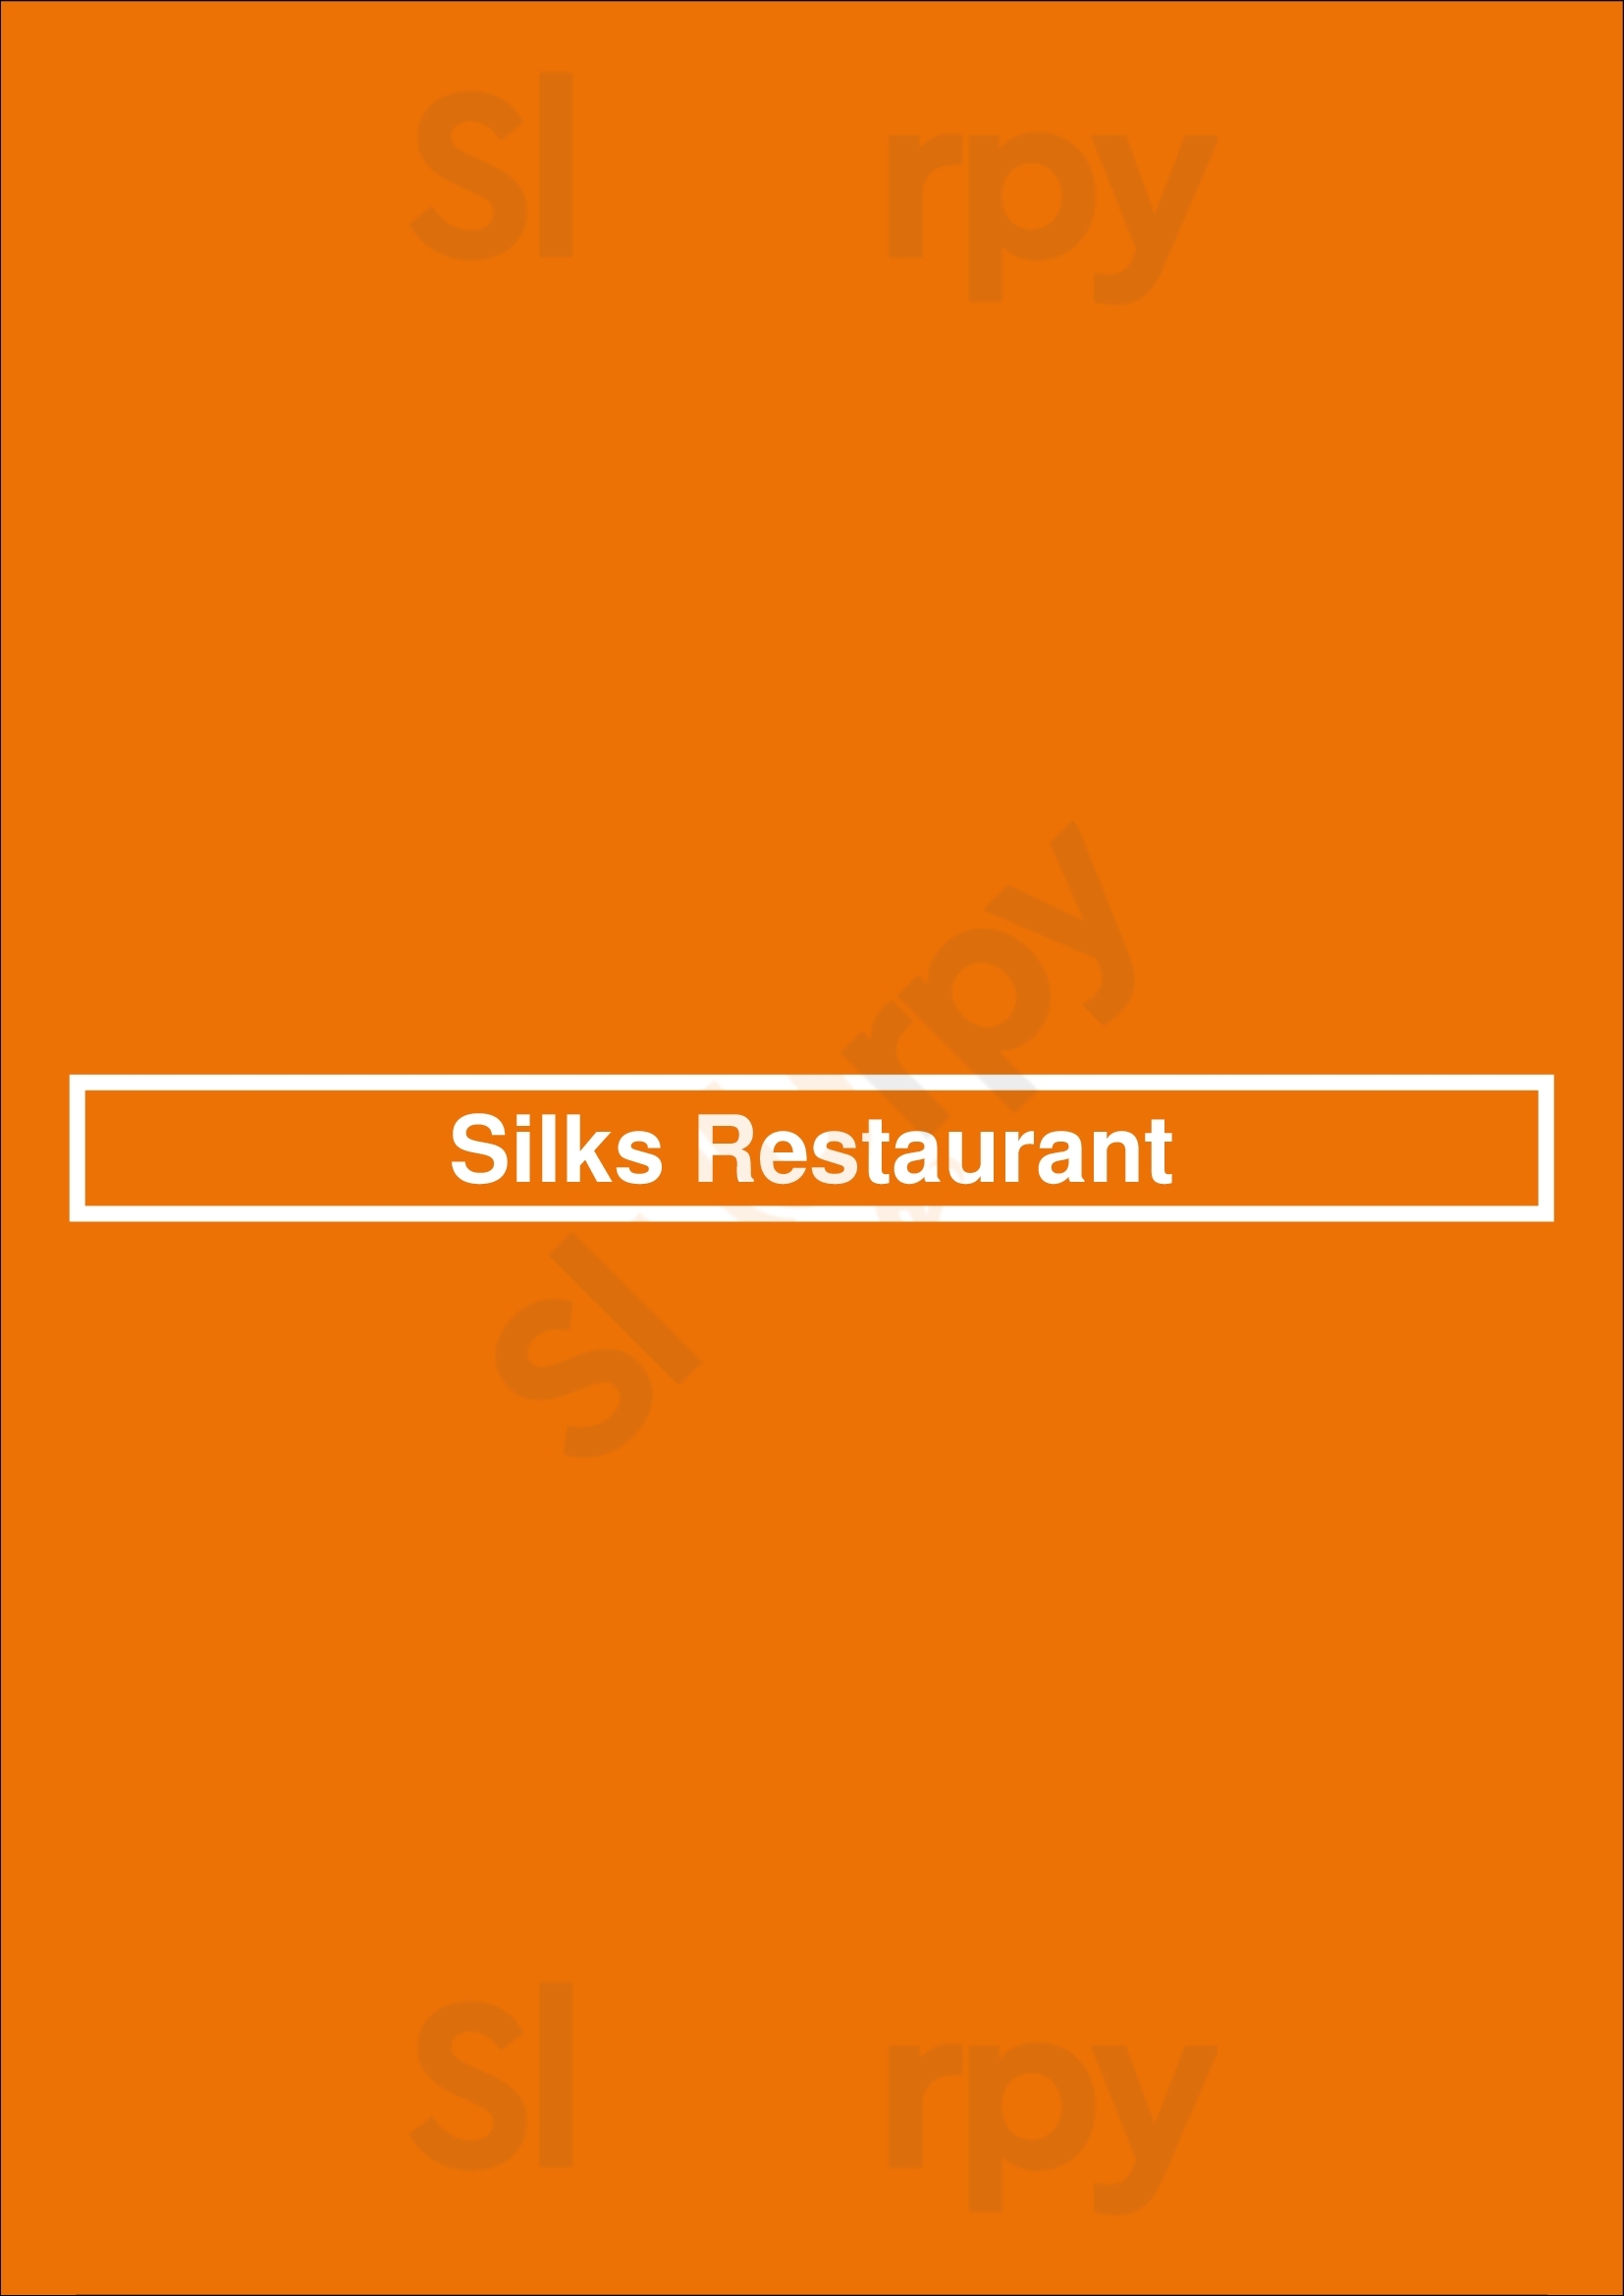 Silks Restaurant Oklahoma City Menu - 1